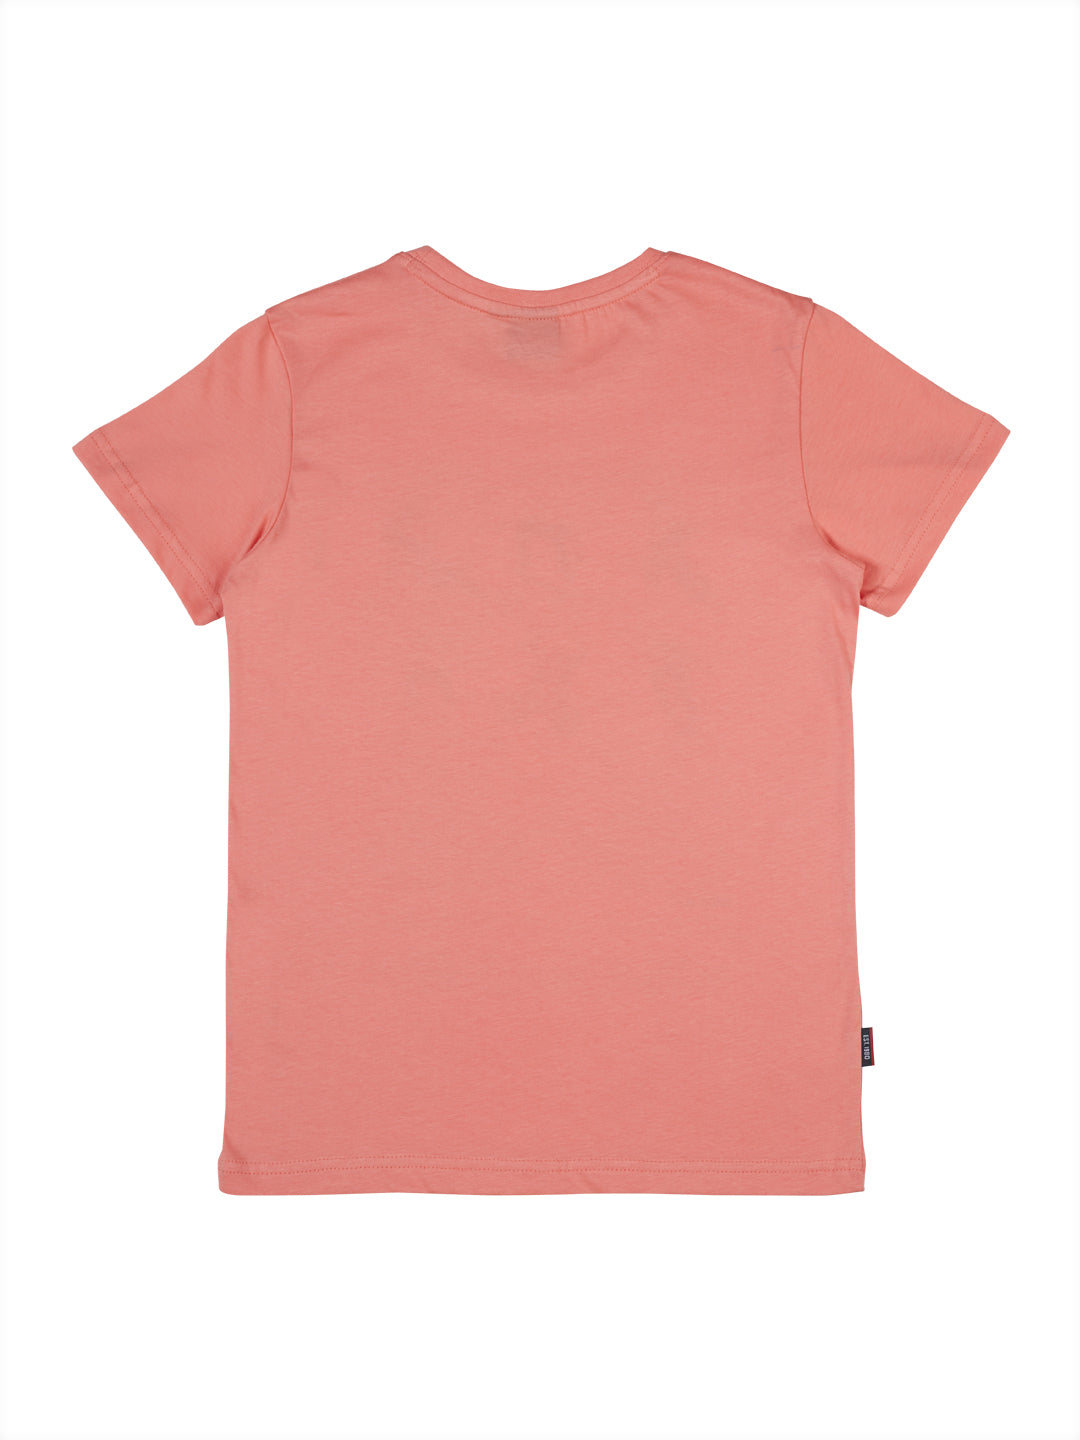 Boys Pink Printed Cotton T-Shirt